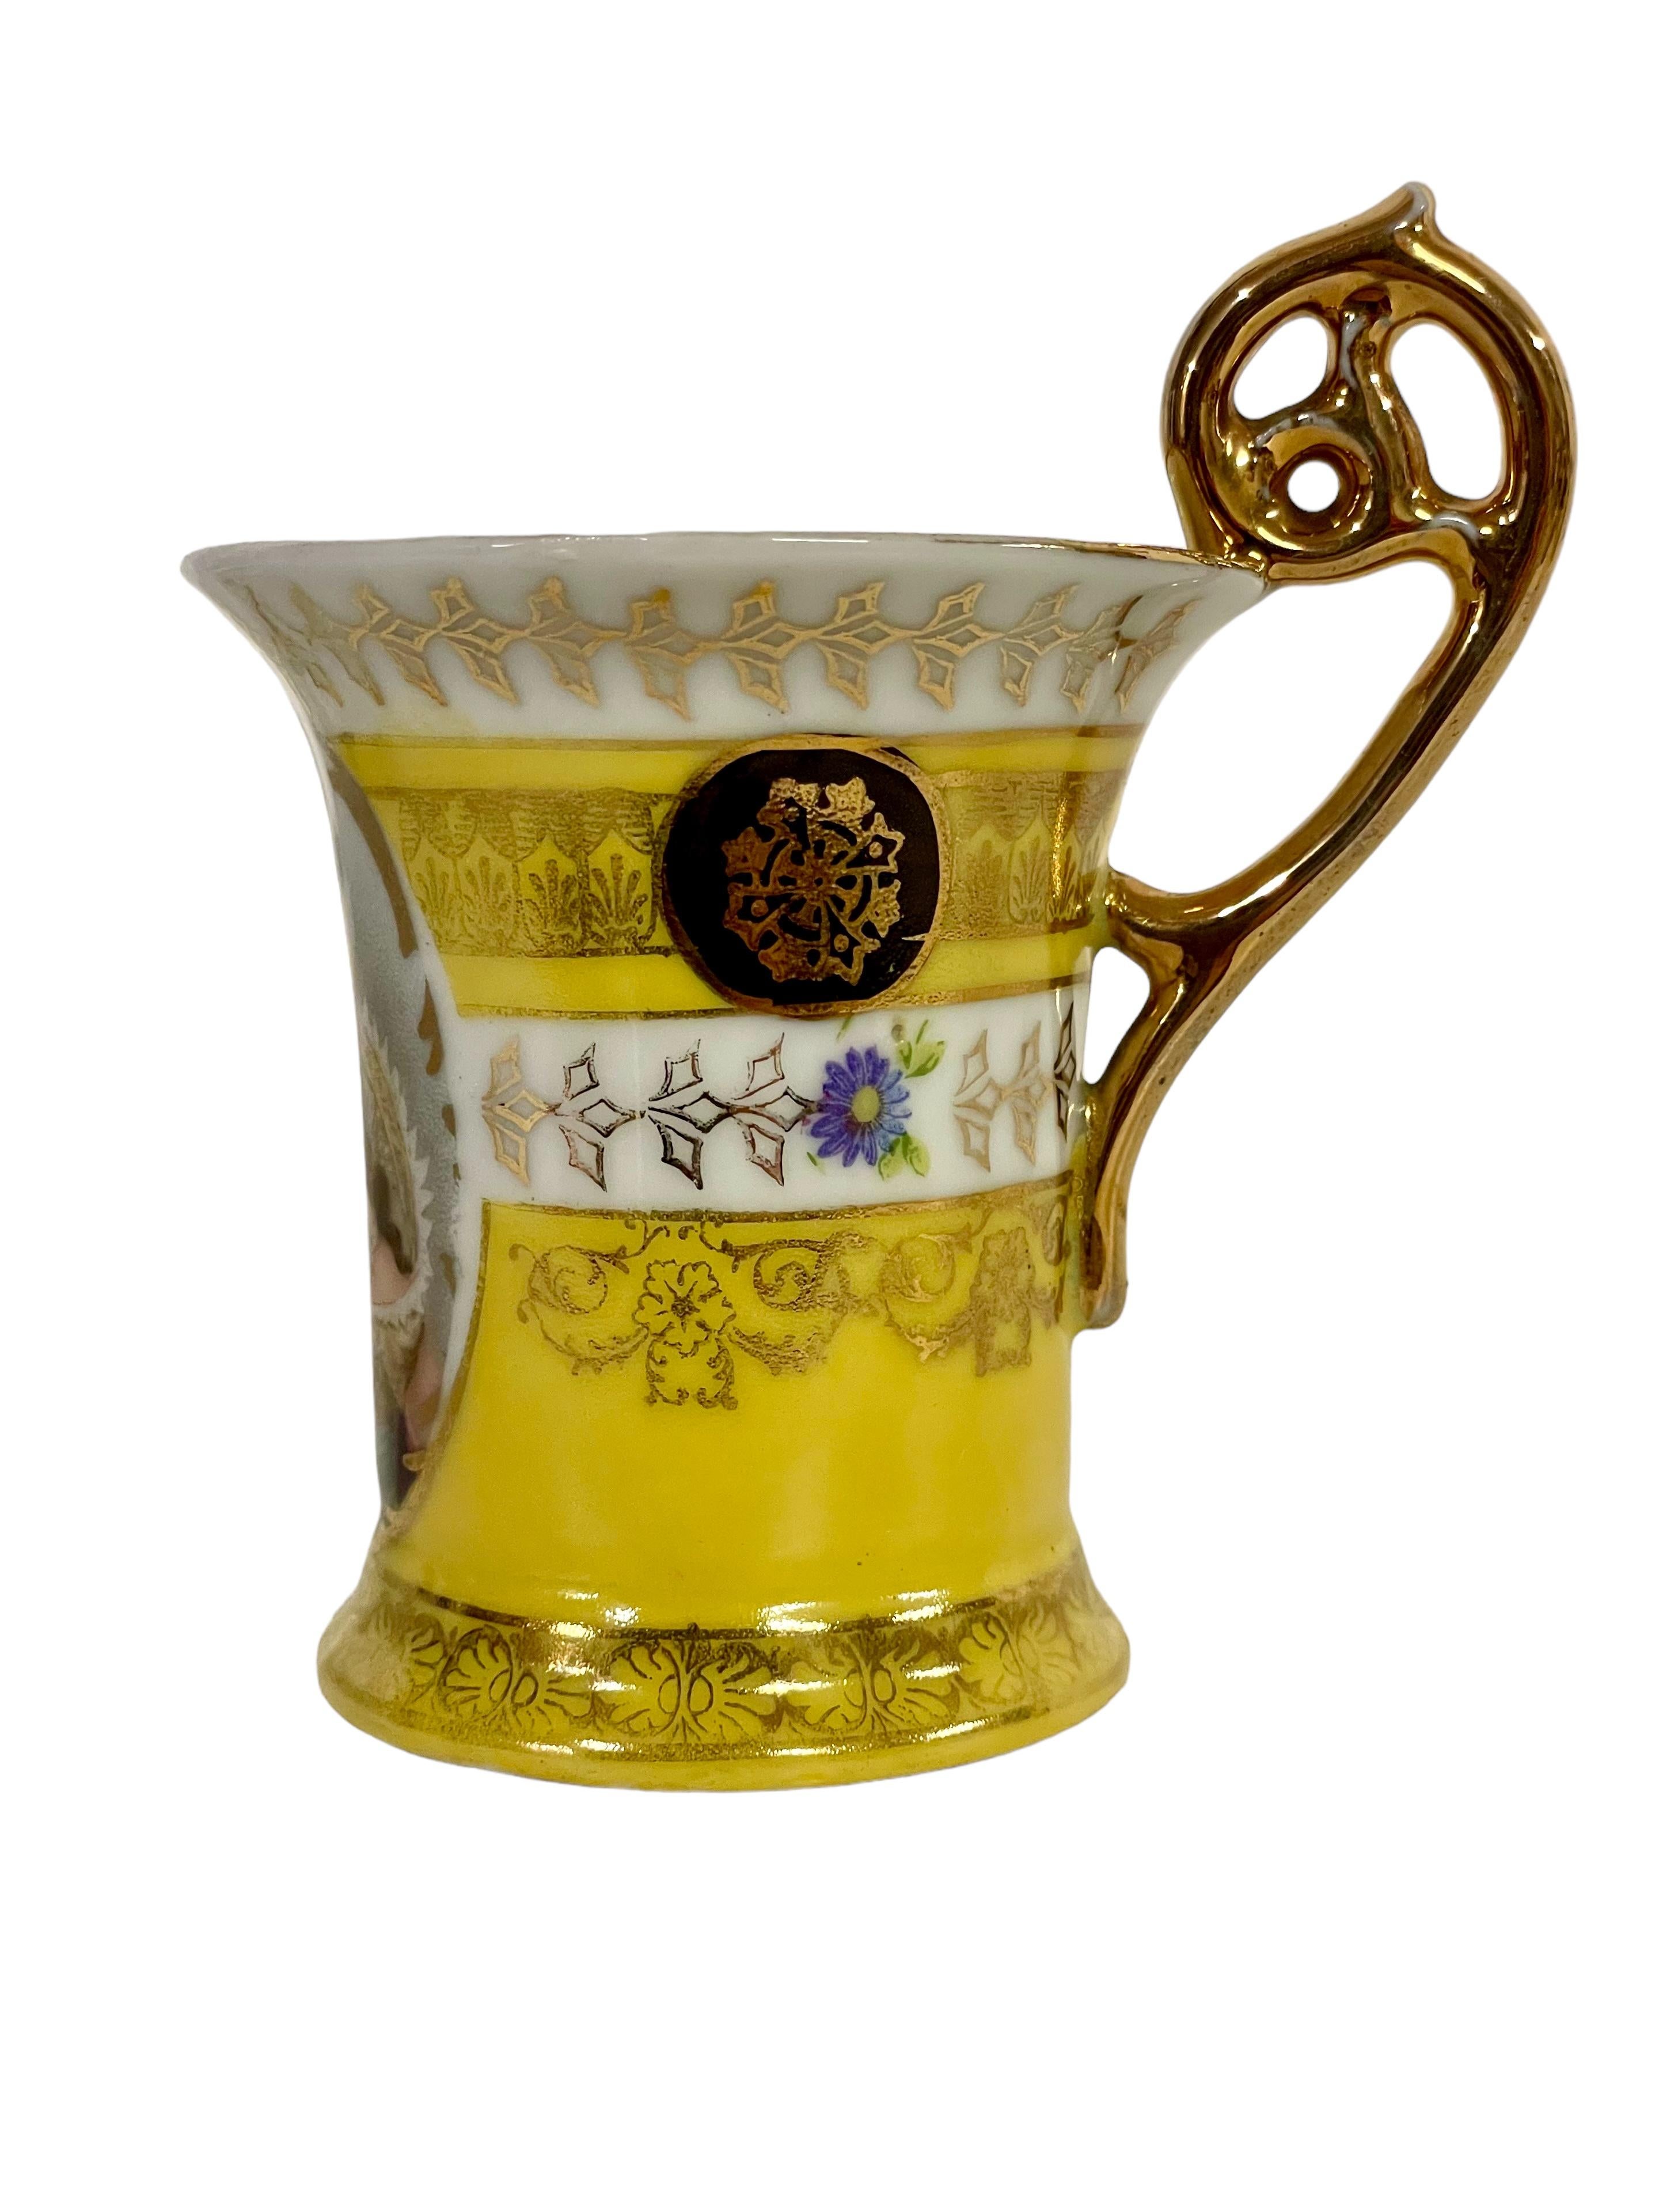 Empire Paris Porcelain Teacup and Saucer Depicting Empress Josephine For Sale